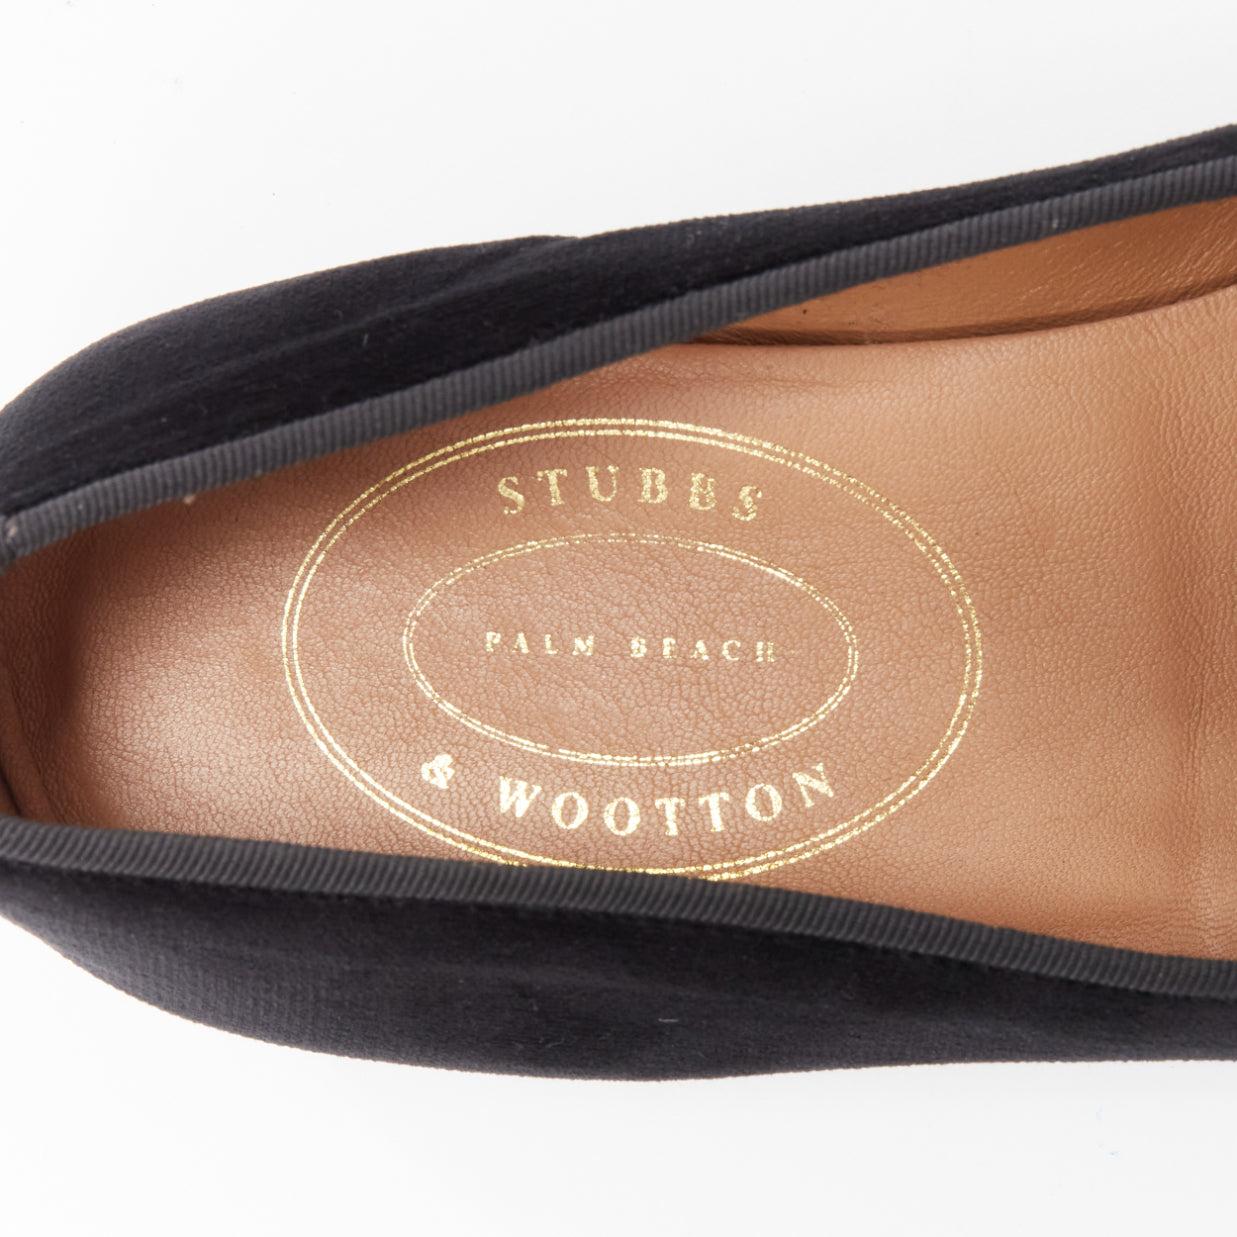 STUBBS WOOTTON College Screw You black velvet smoking slipper loafer US9 EU42 6